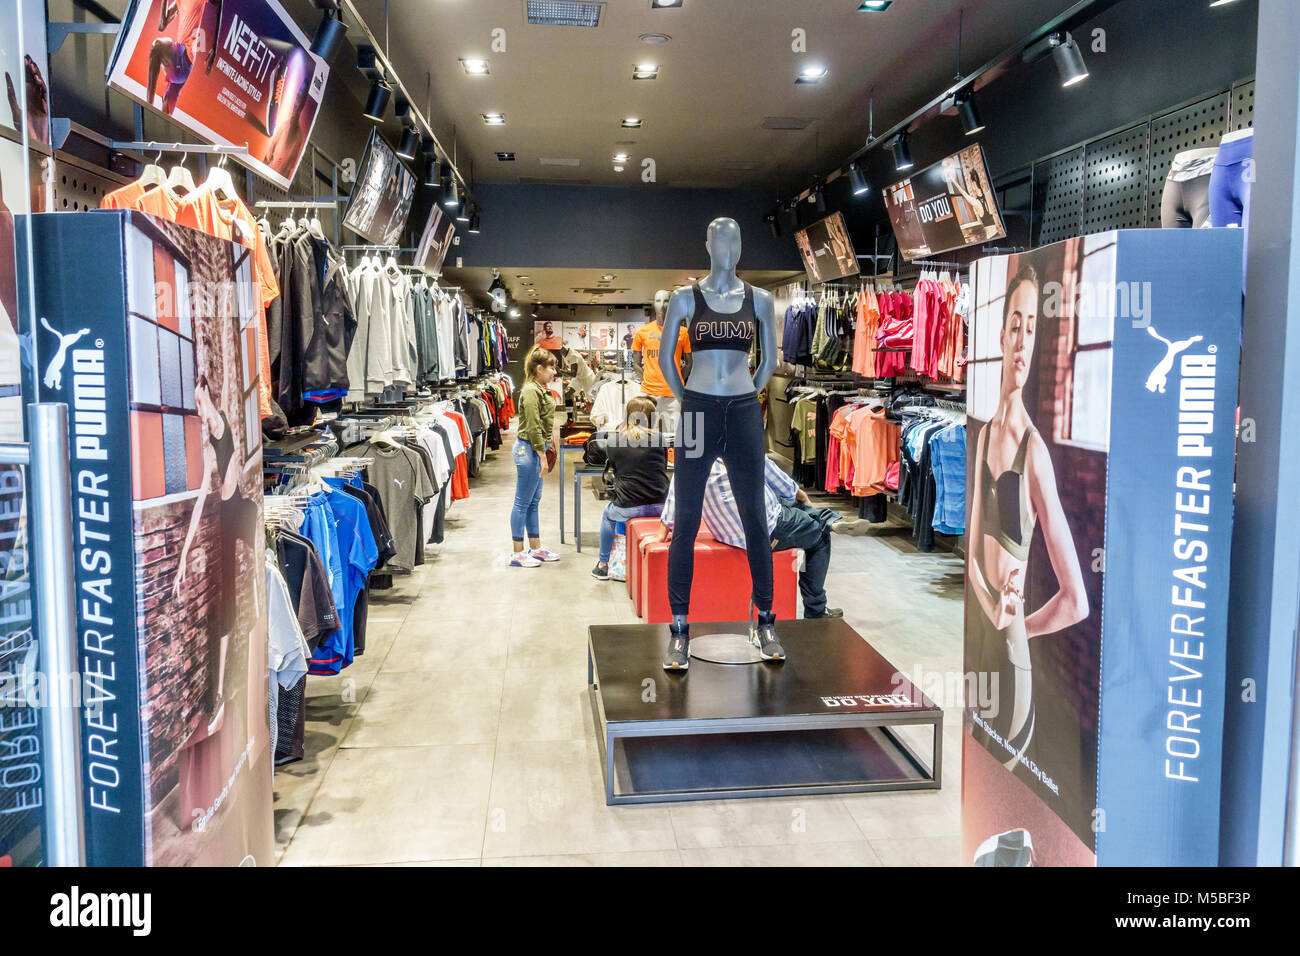 Adquirir \u003e tienda puma ropa deportiva- Off 64% - cankocatas.com!